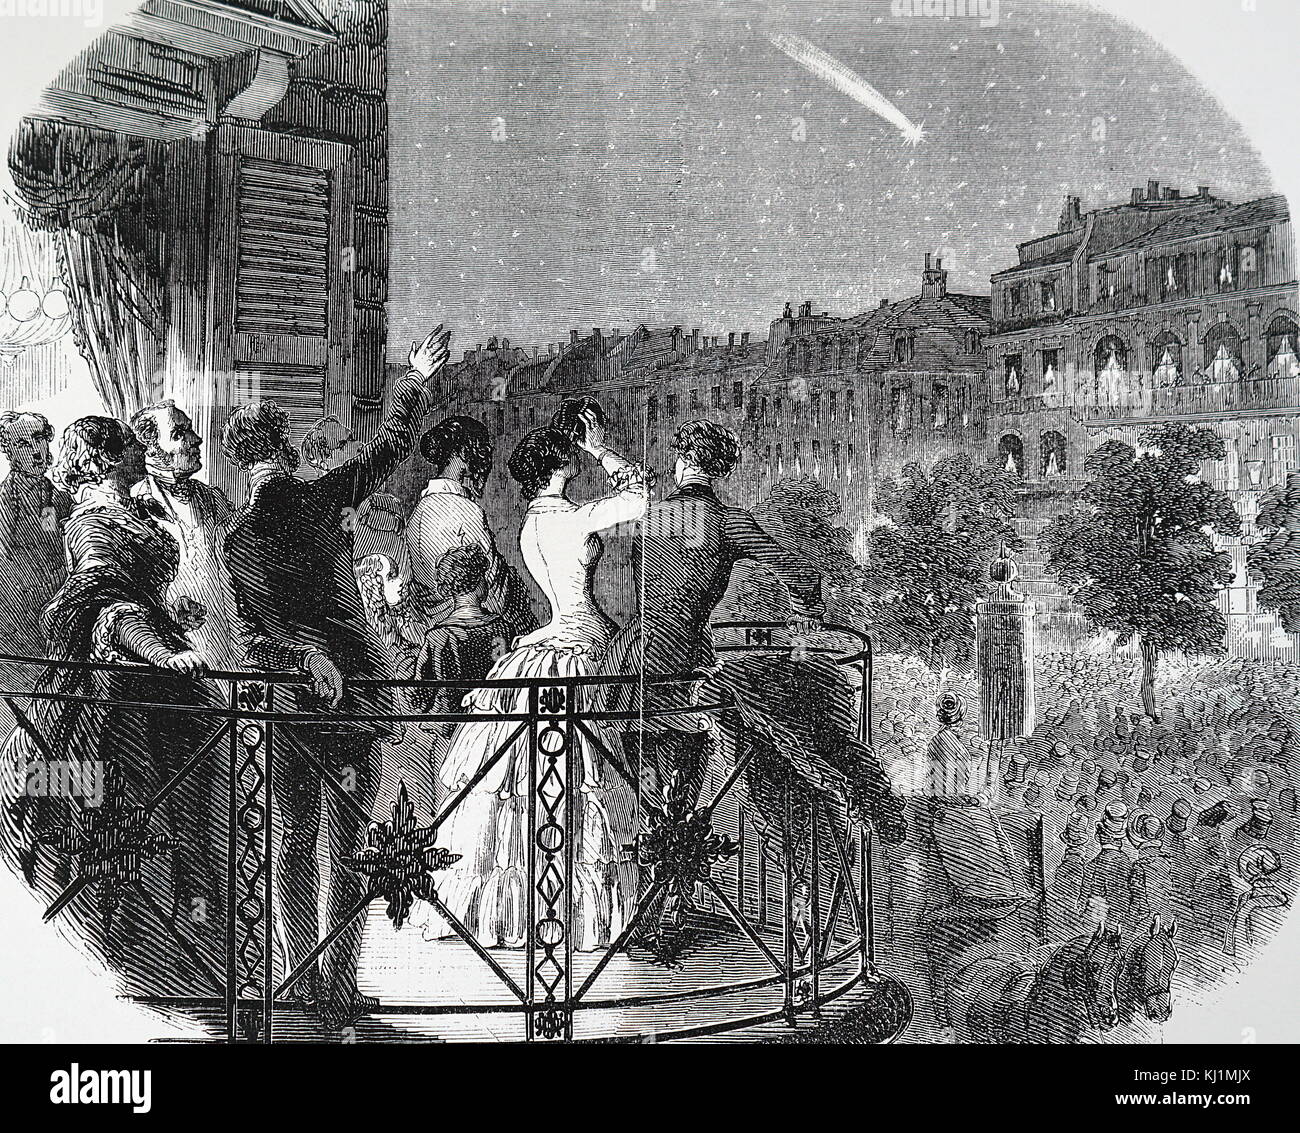 Grabado representando el gran cometa de 1853. Fecha del siglo XIX Foto de stock